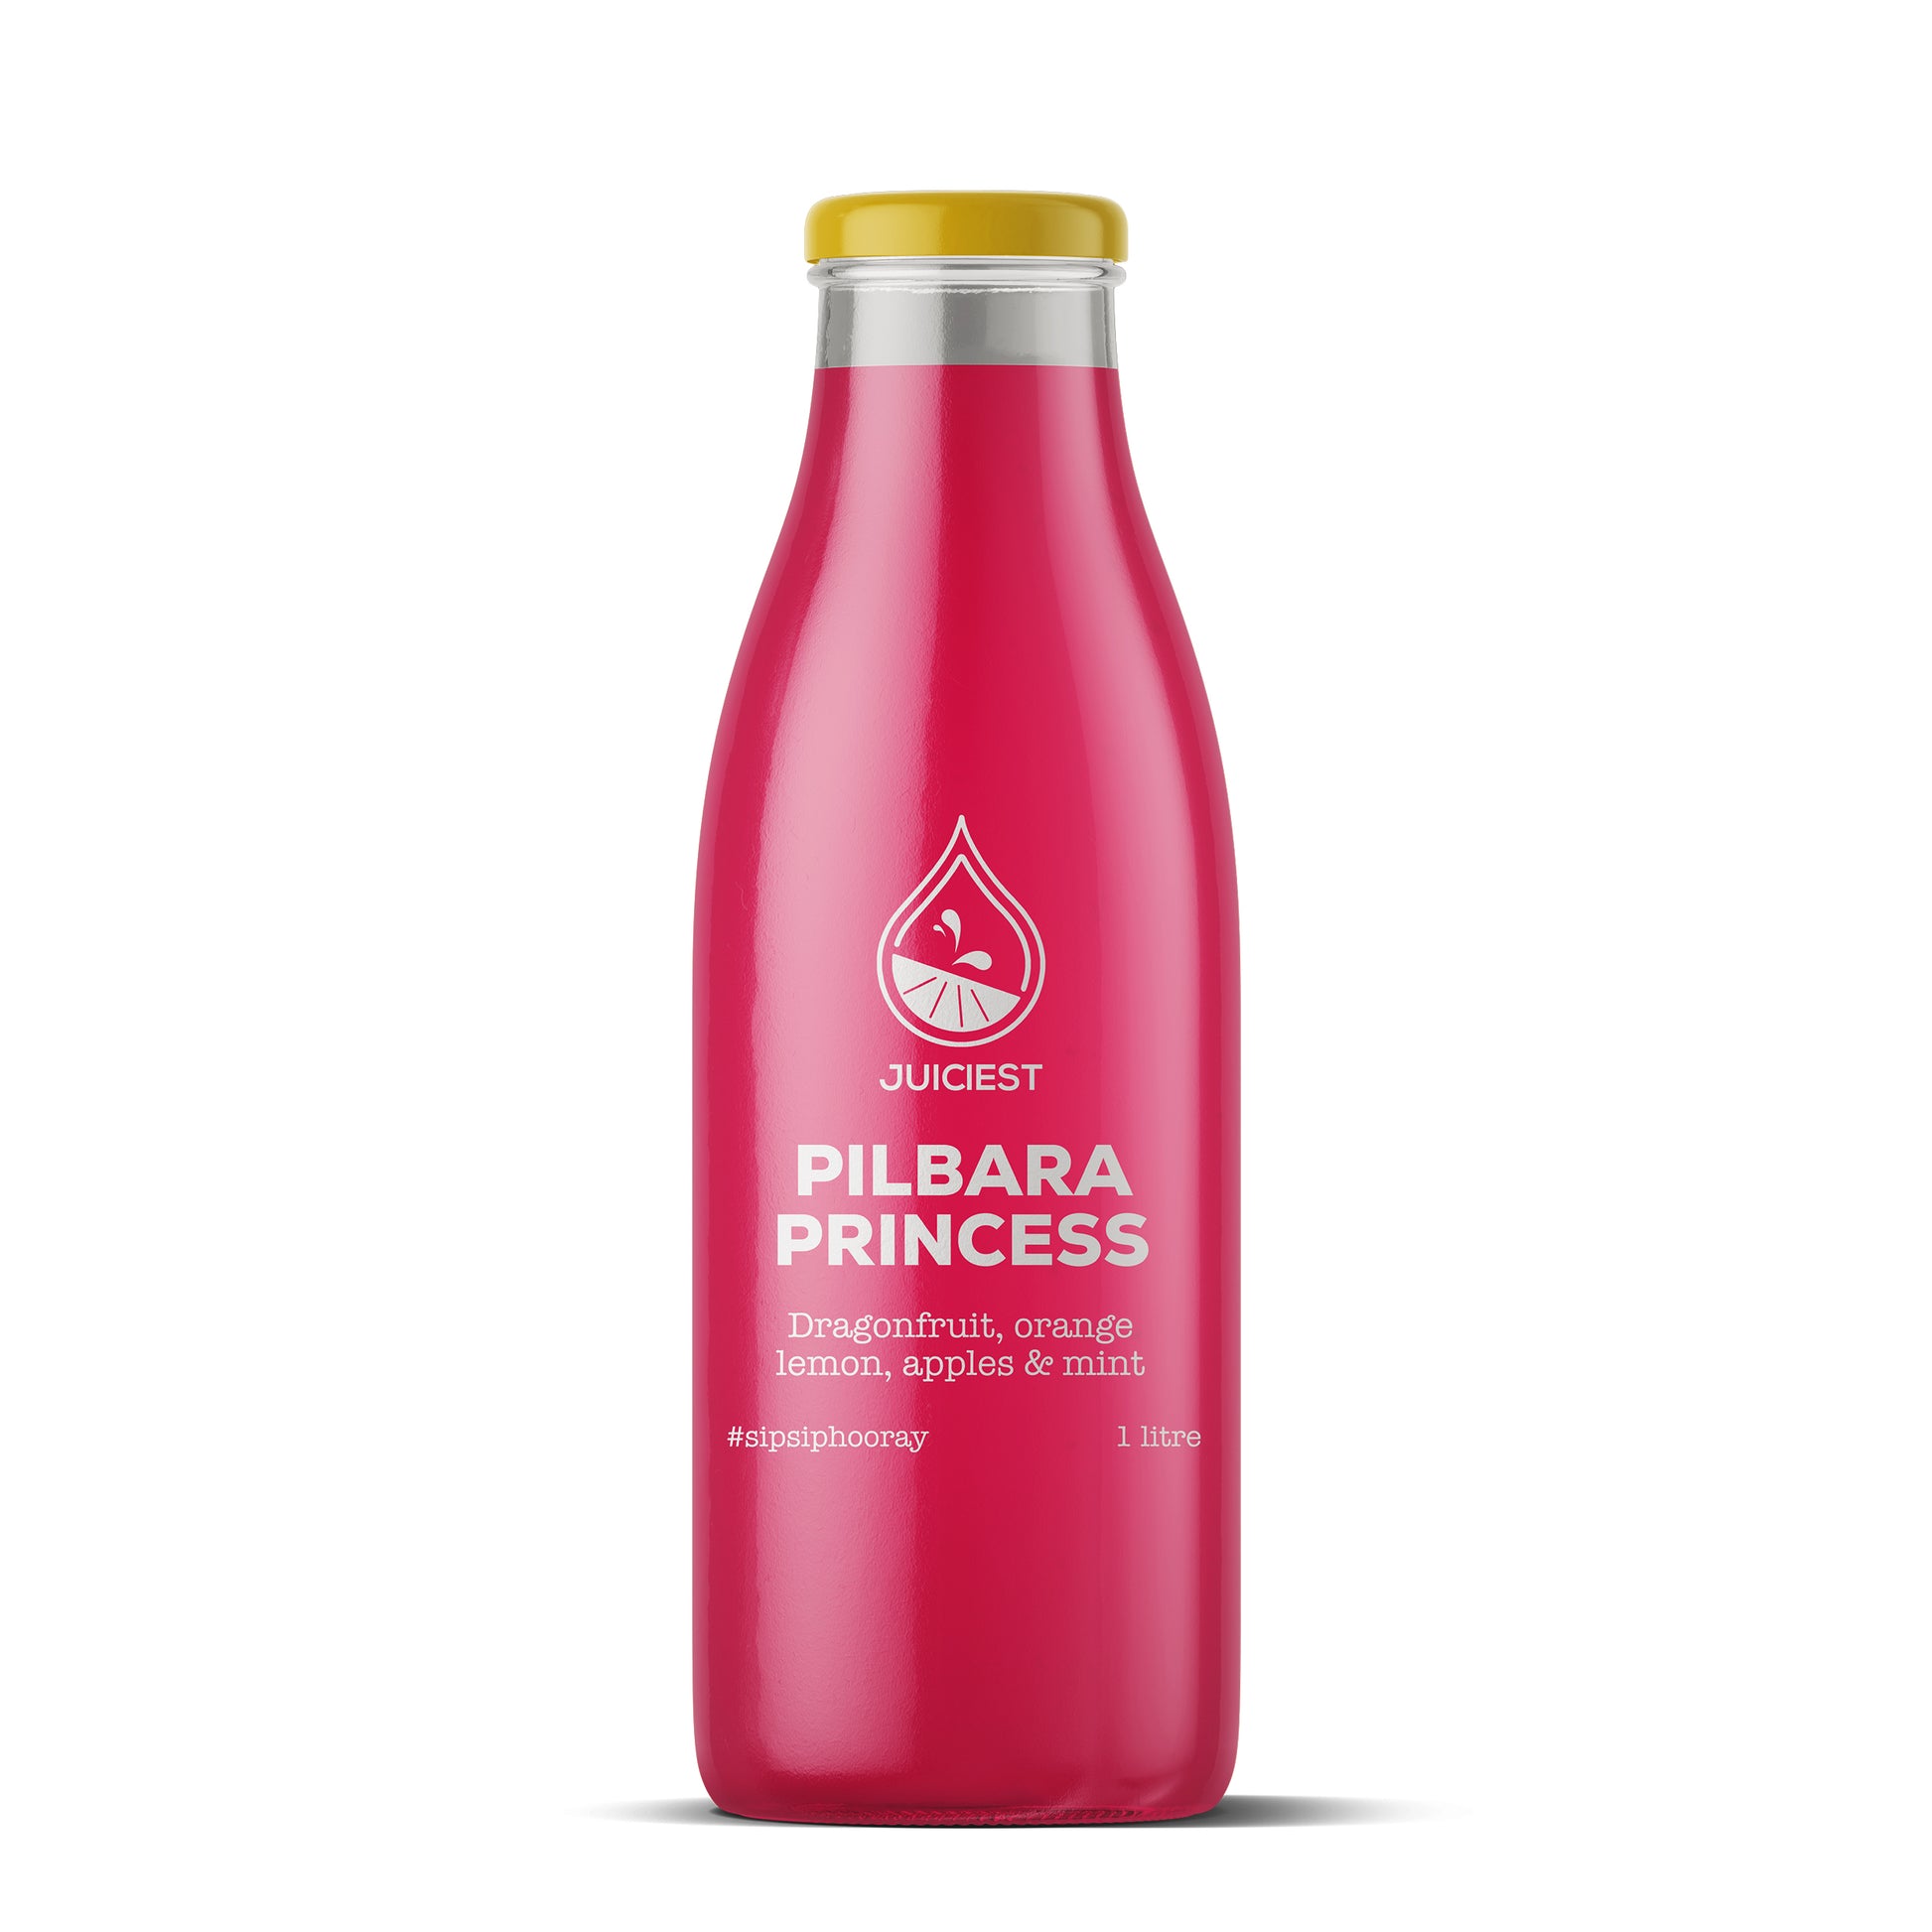 Juiciest Pilbara Princess 1L bottle